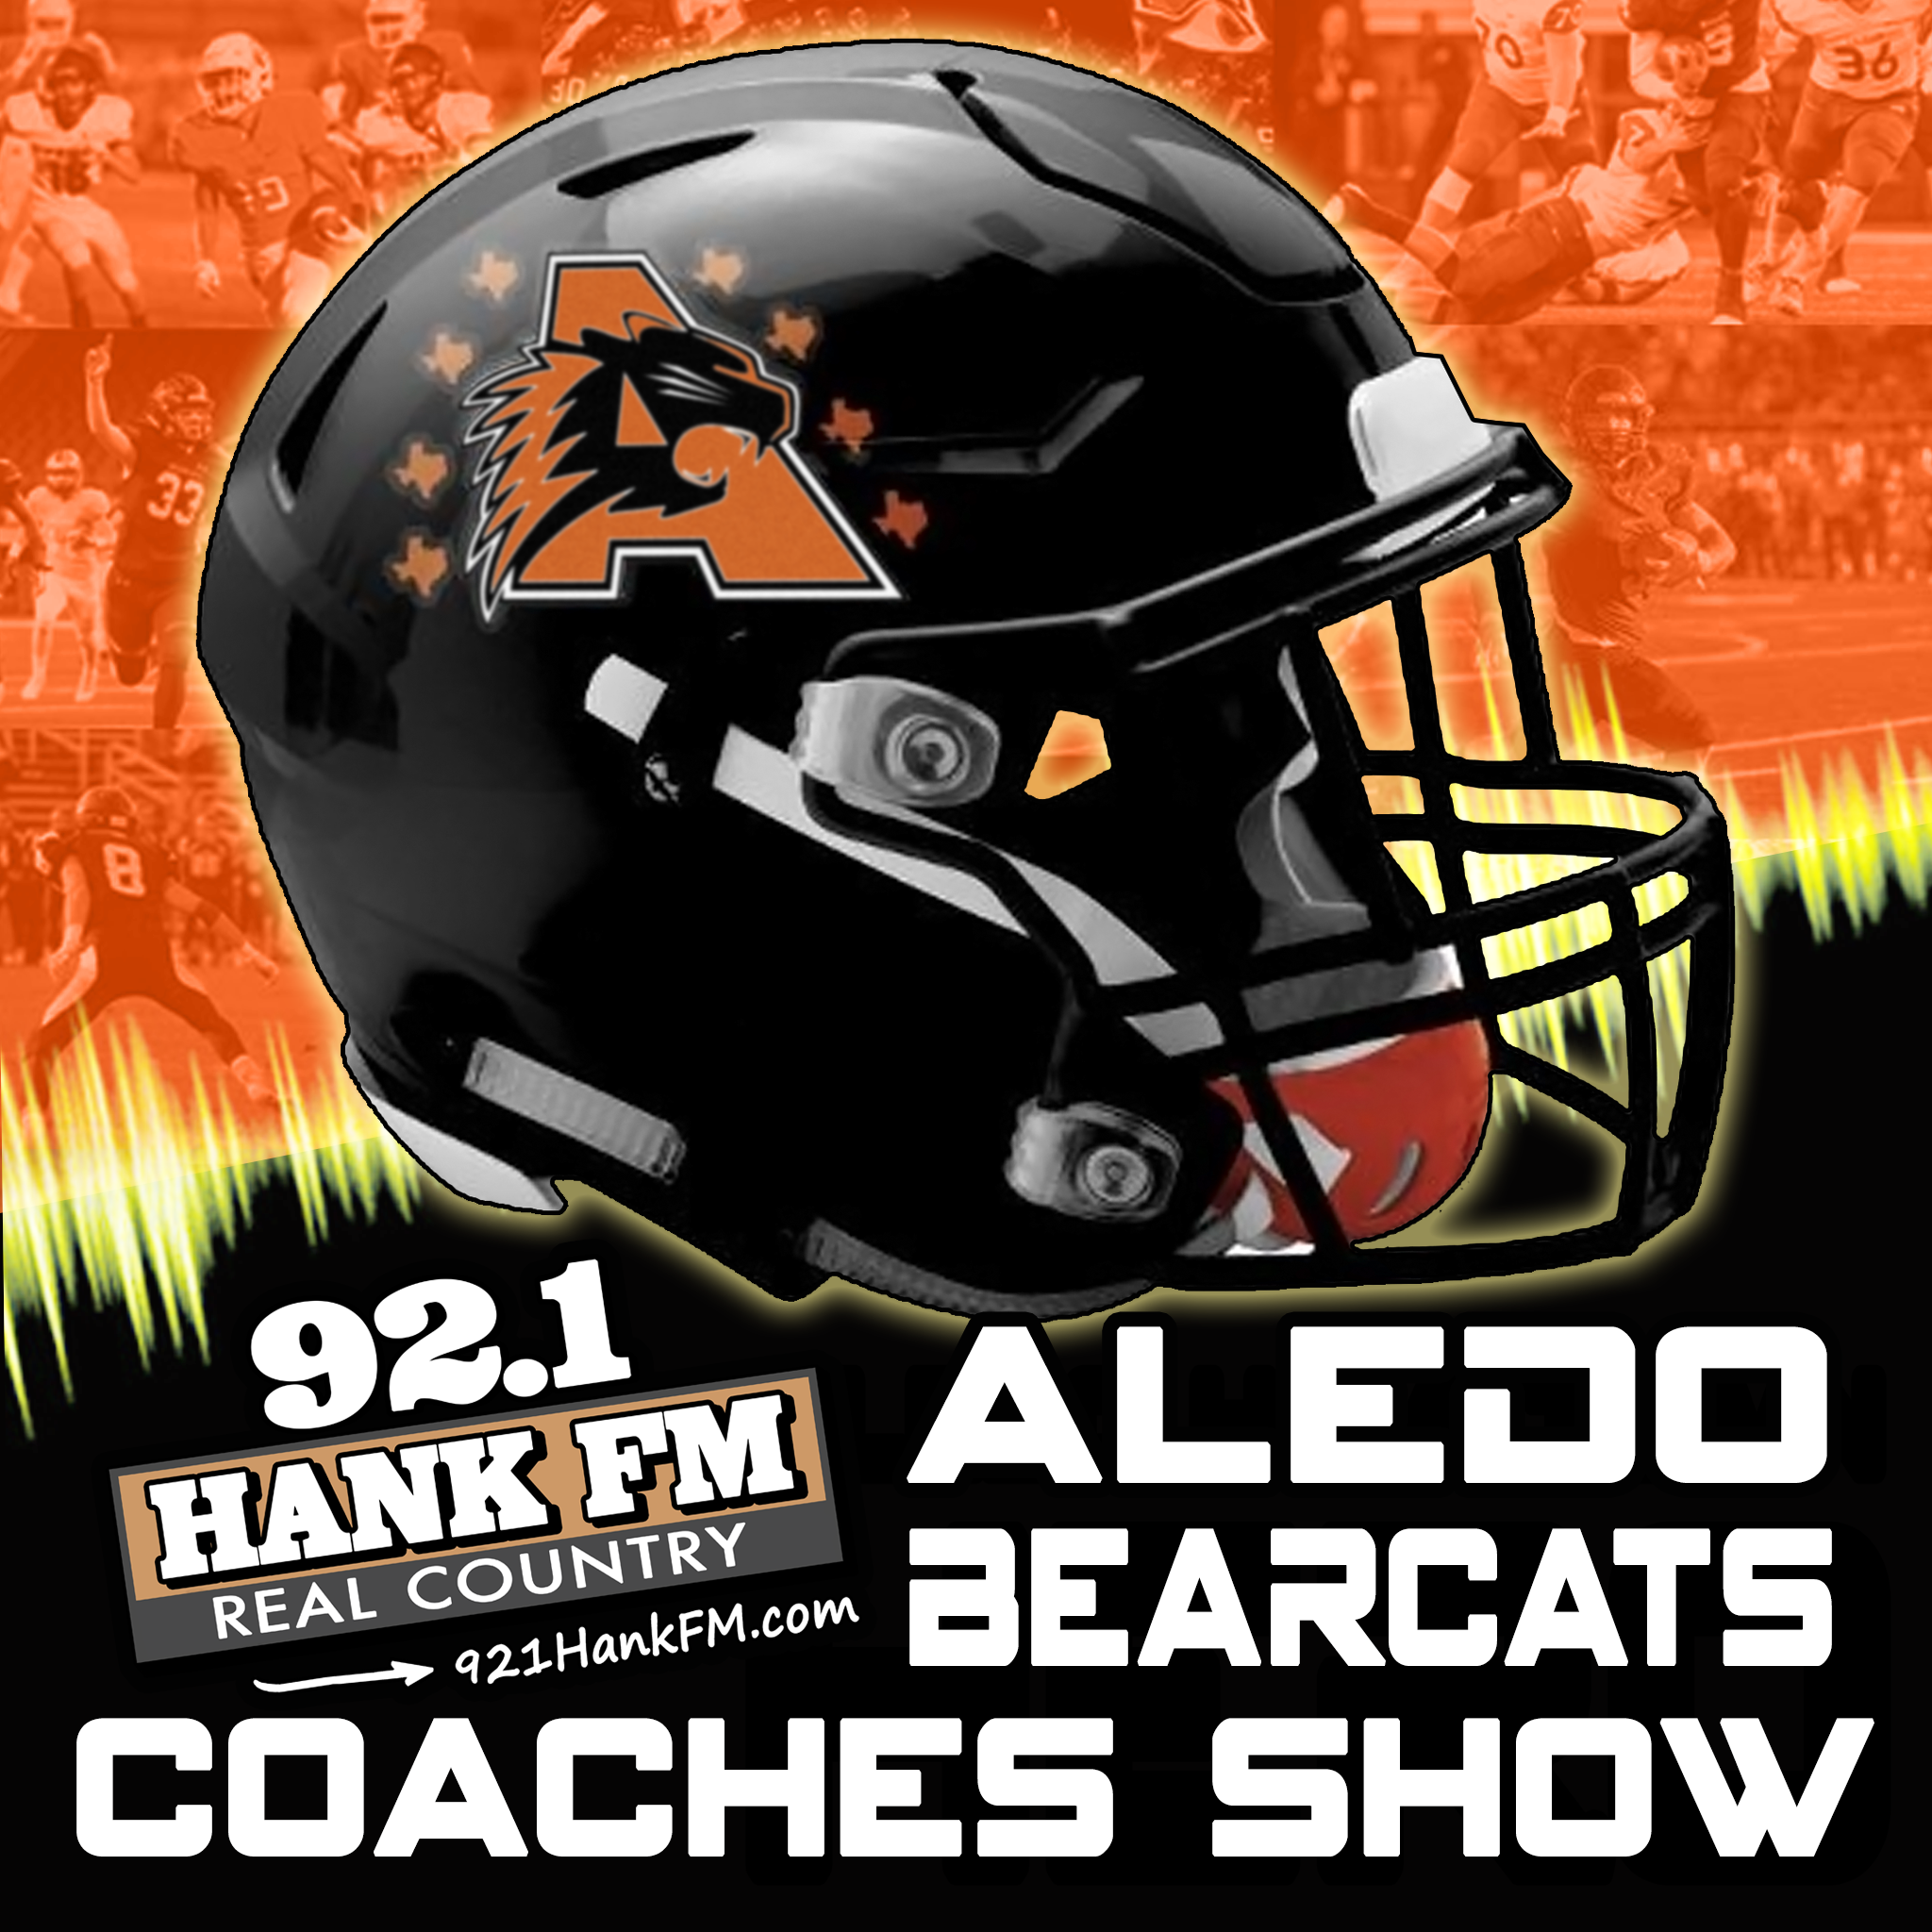 Aledo Bearcats Coaches Show